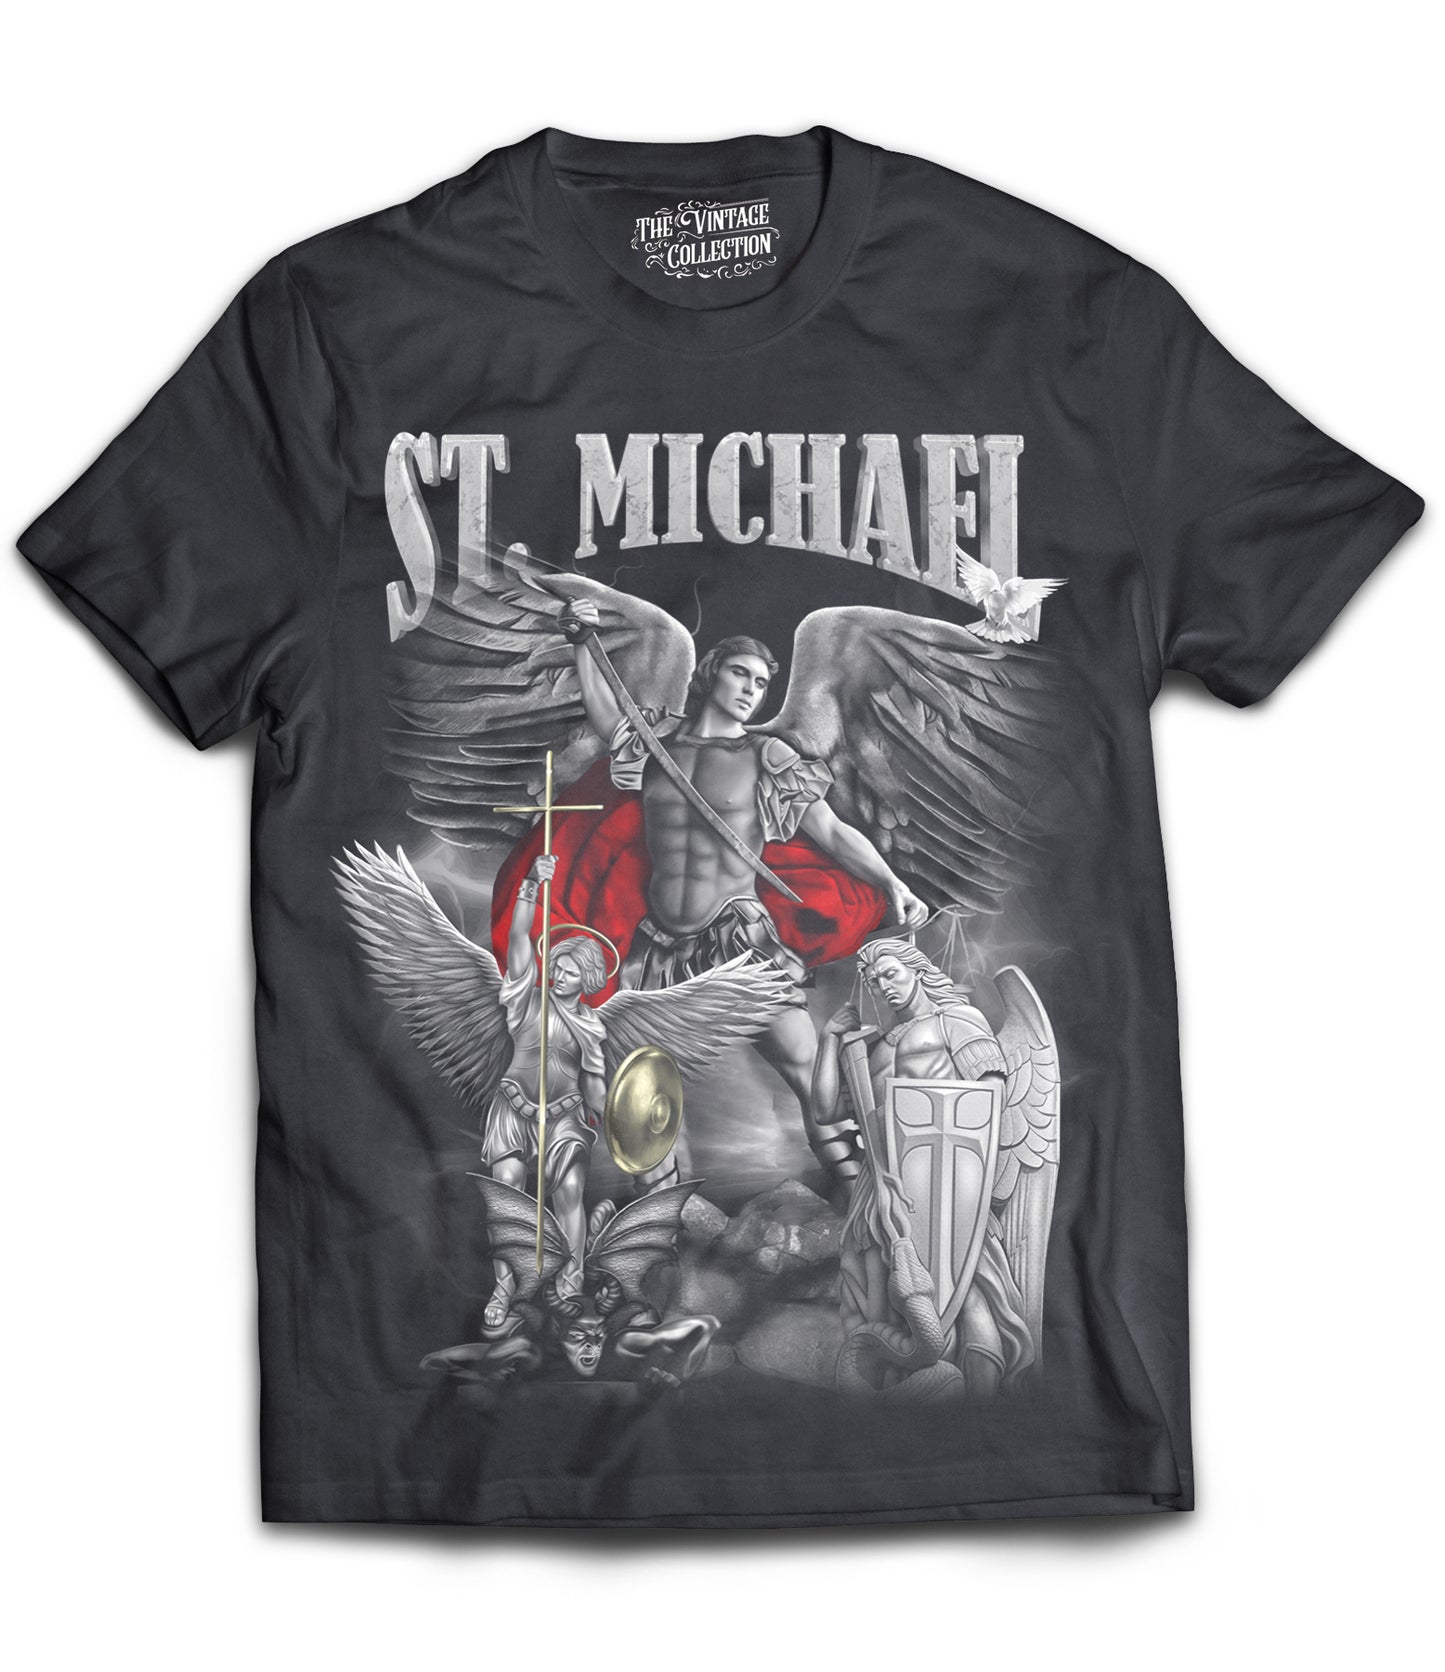 St. Michael Tribute T-Shirt